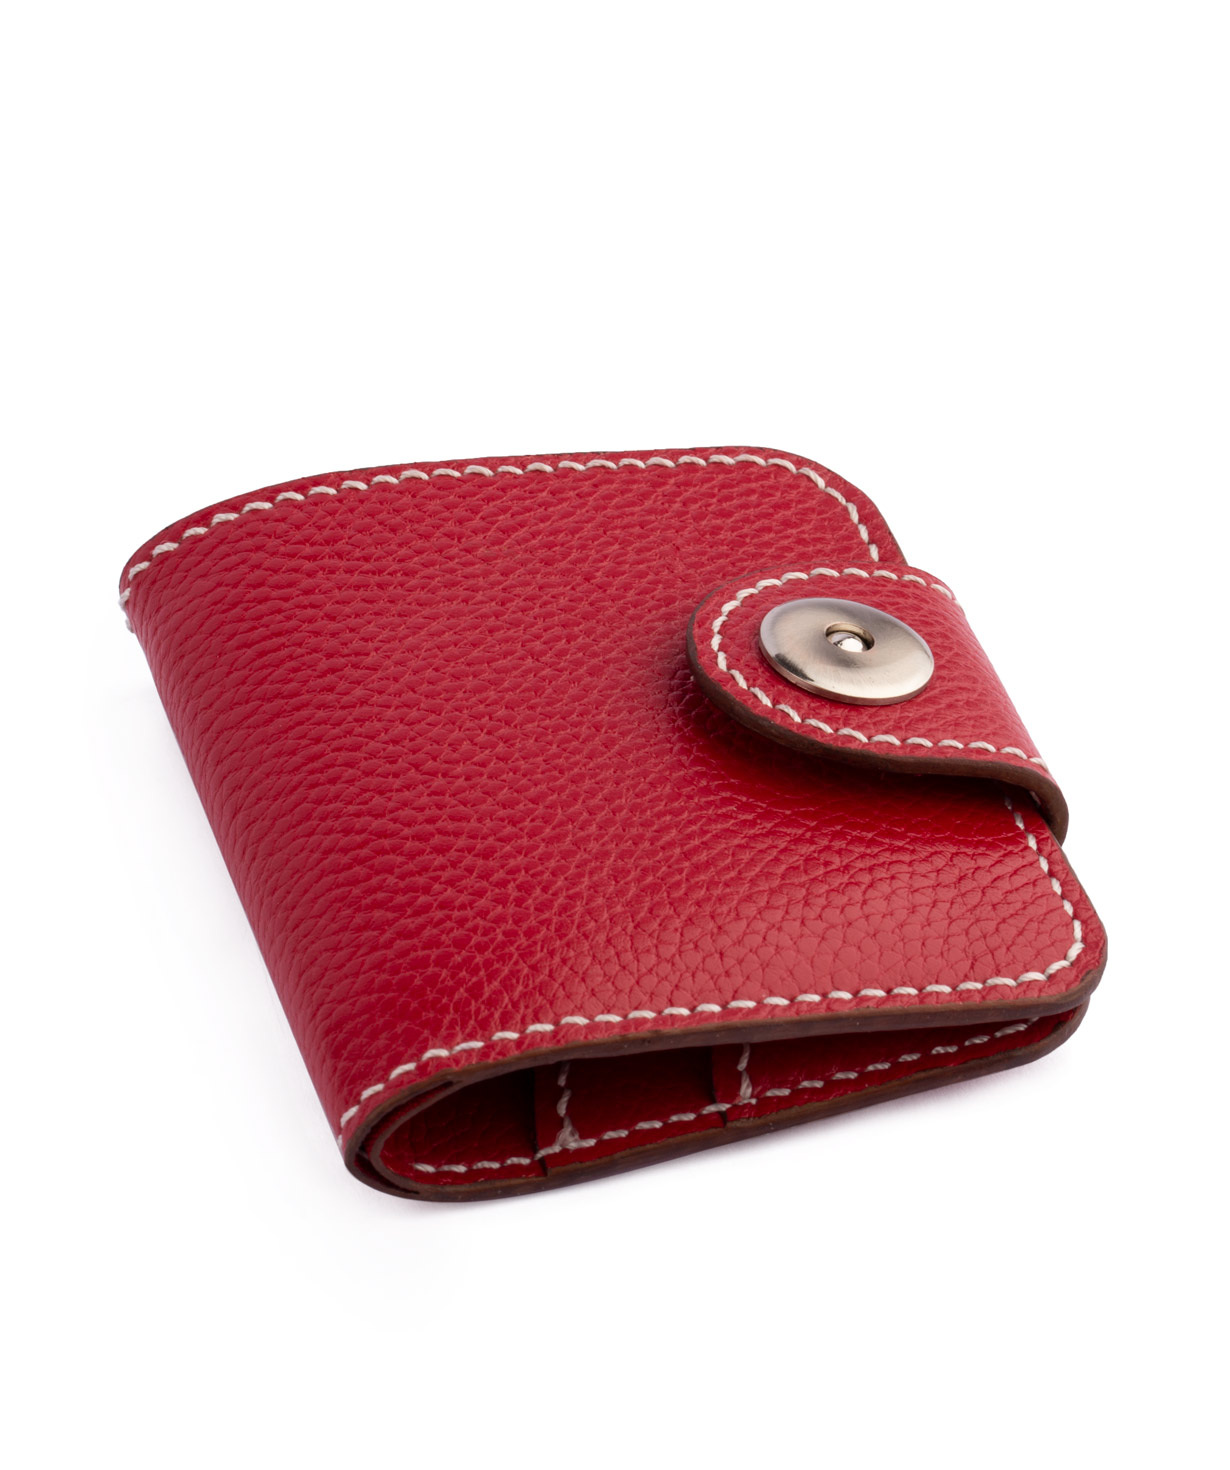 Wallet `Ruben's bag` handmade №1